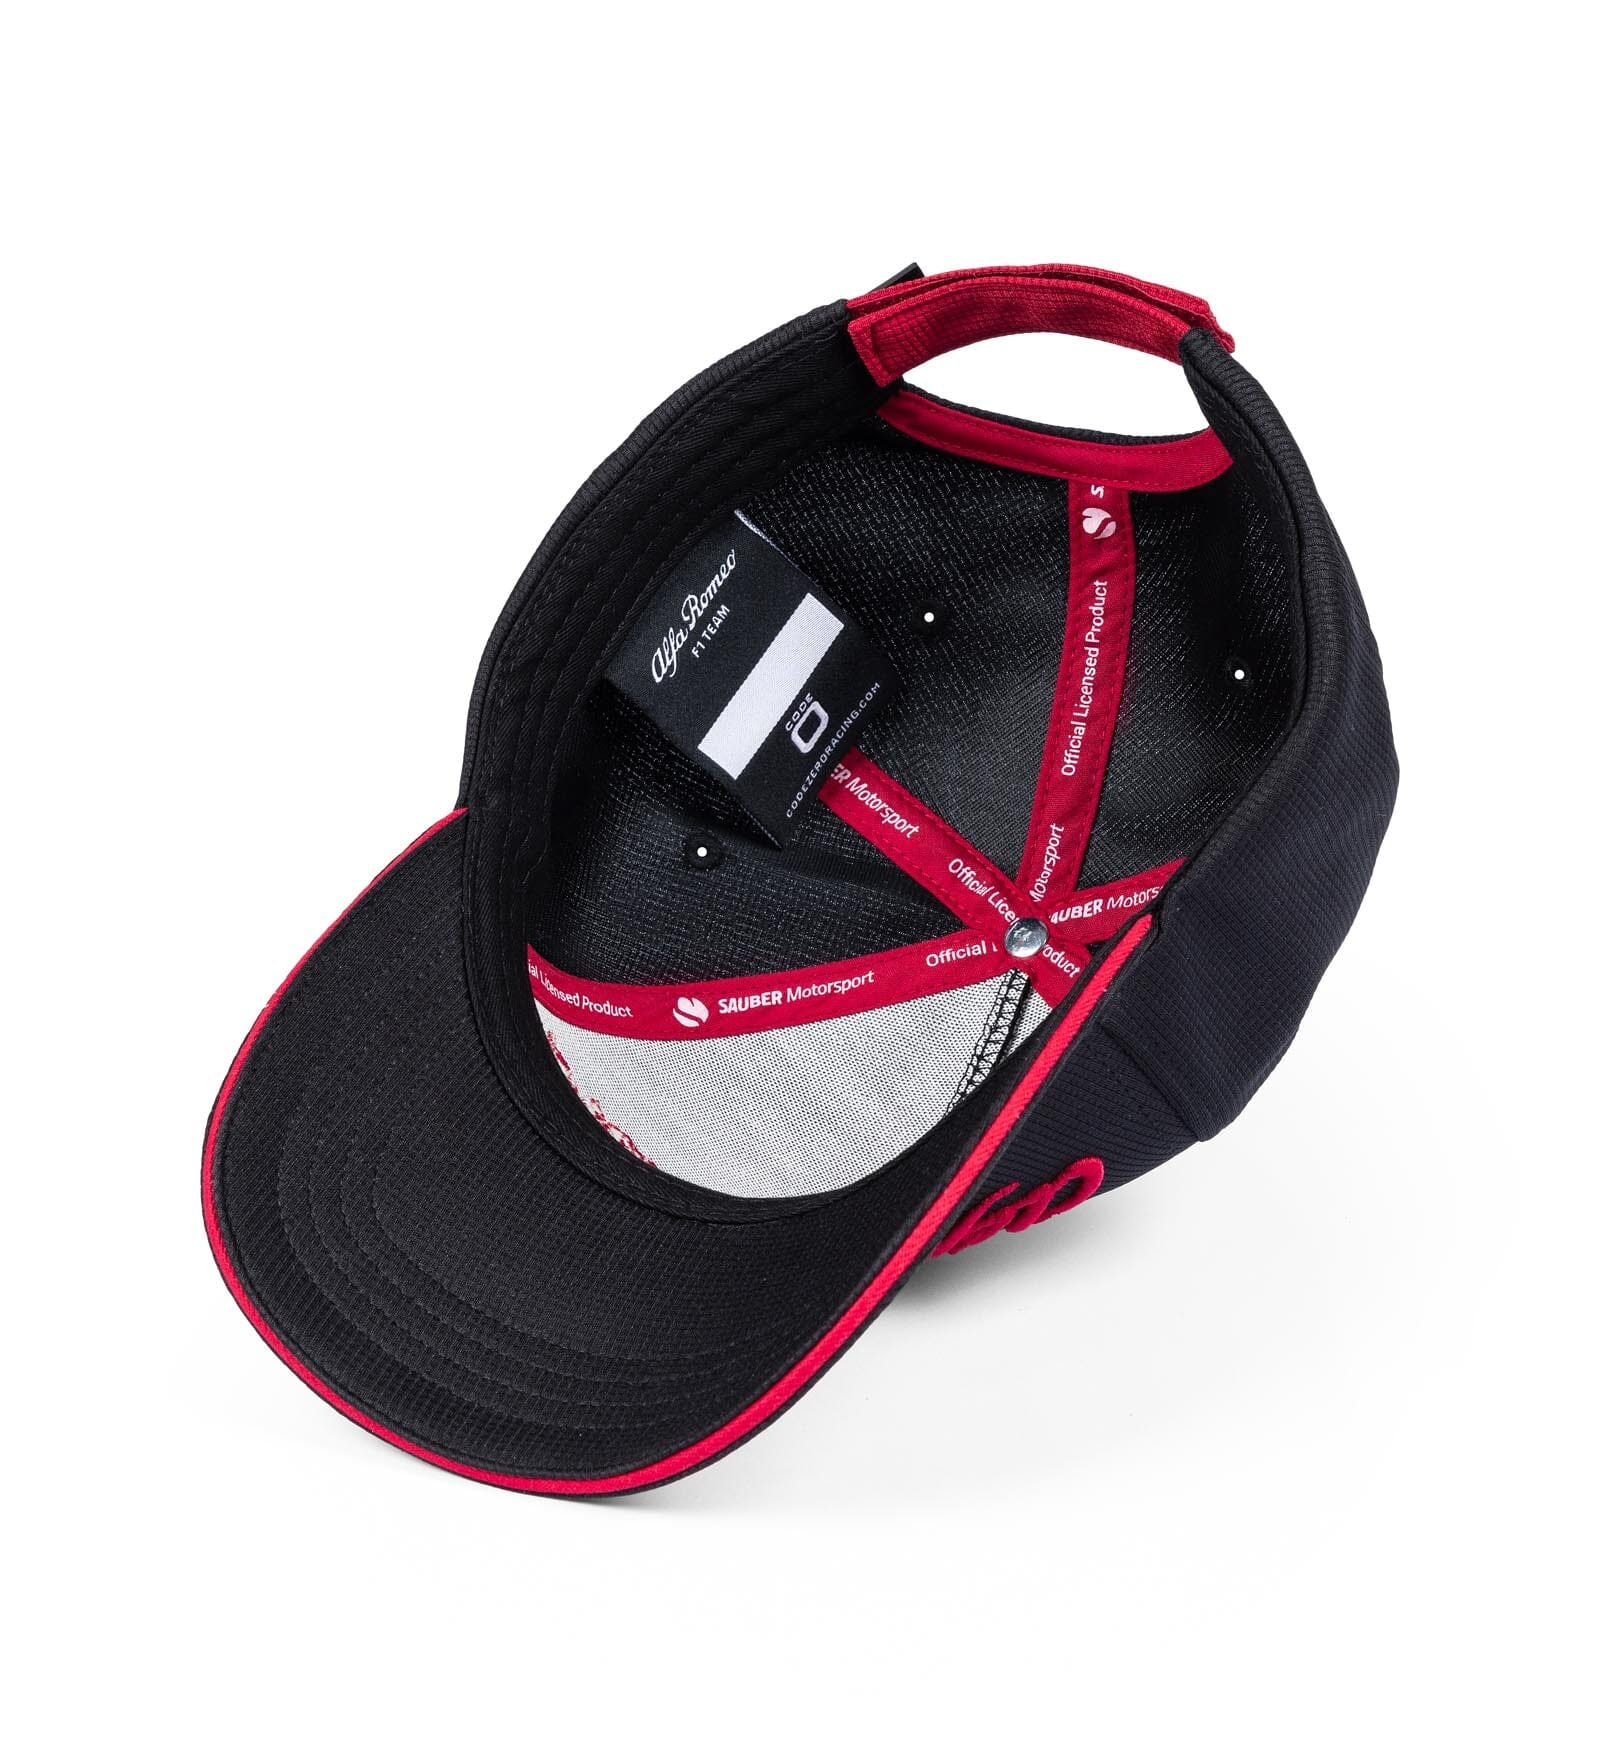 Alfa Romeo Racing F1 Limited Edition Team Baseball Hat - White/Black